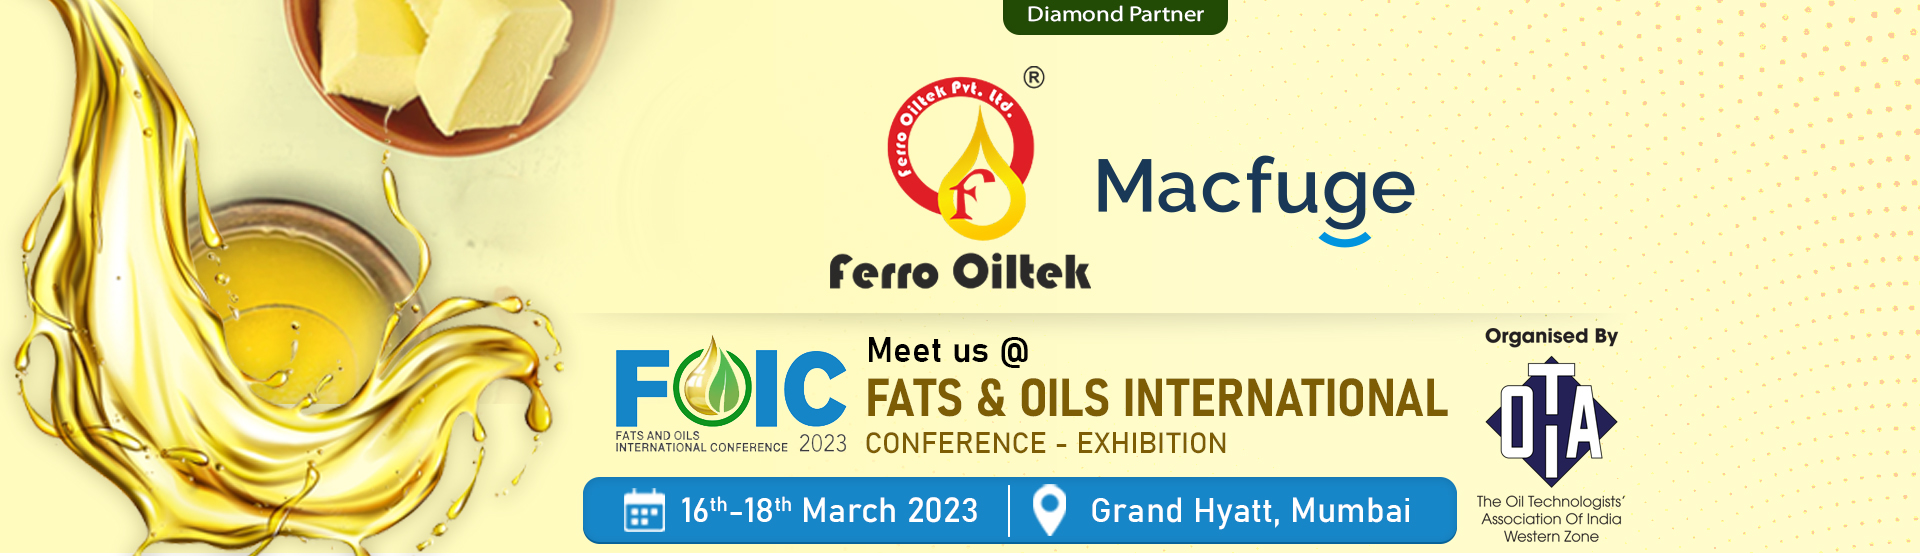 FATS & OILS INTERNATIONAL
Conference - Exhibition FOIC OTAI 2023 Ferro Oiltek